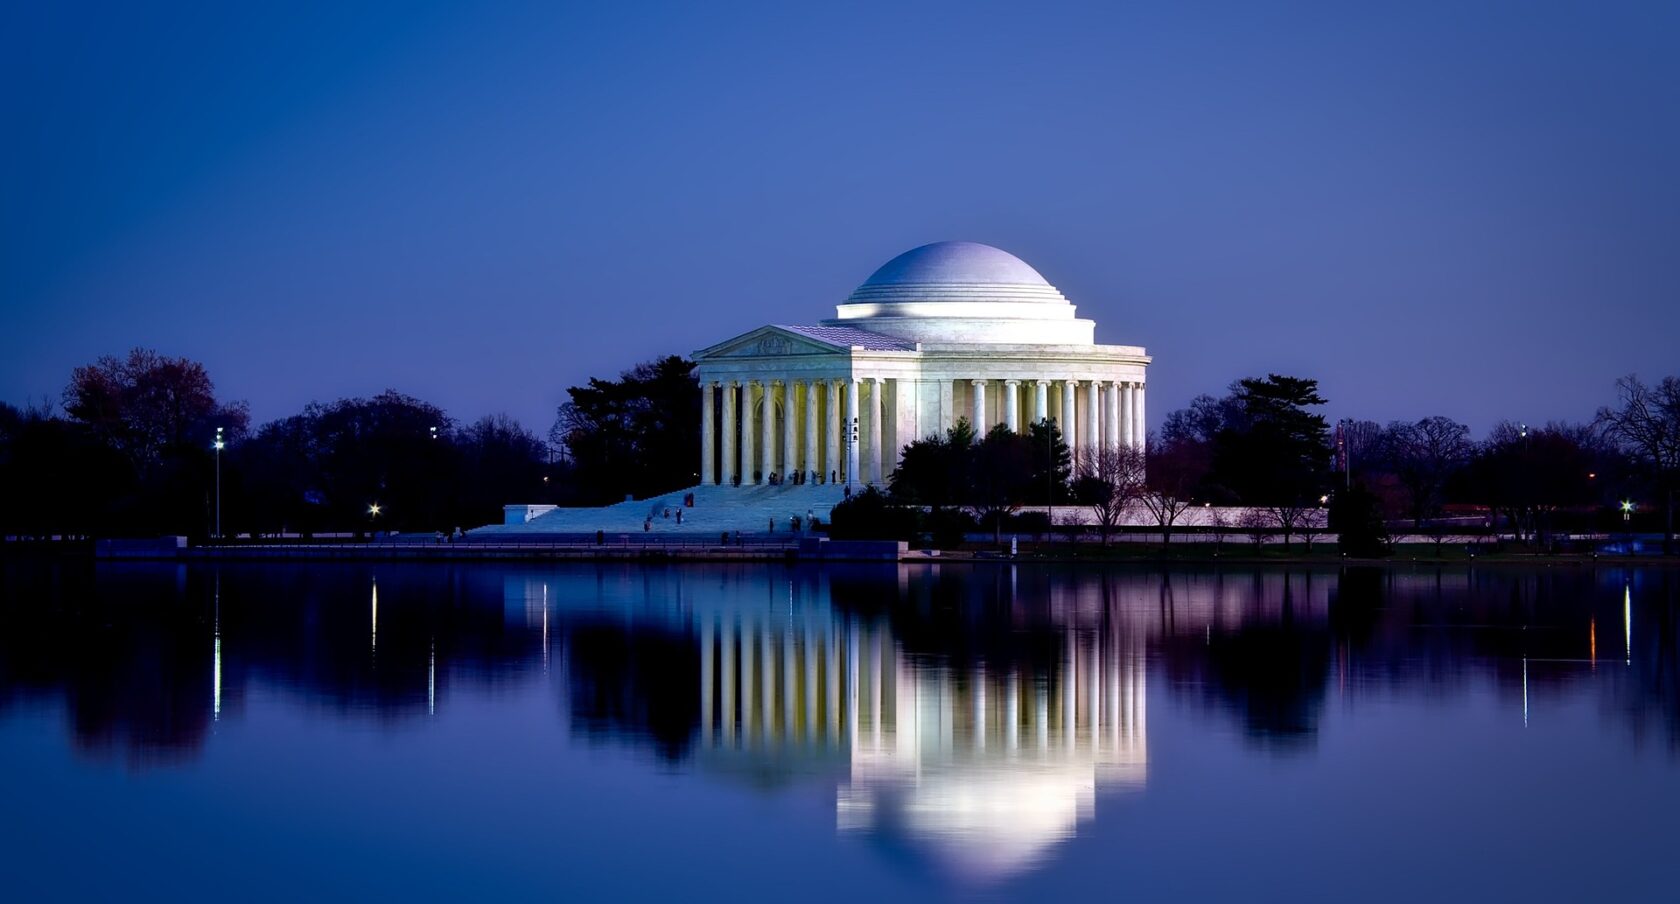 The Jefferson Memorial in Washington, D.C. (an Atlantis site).